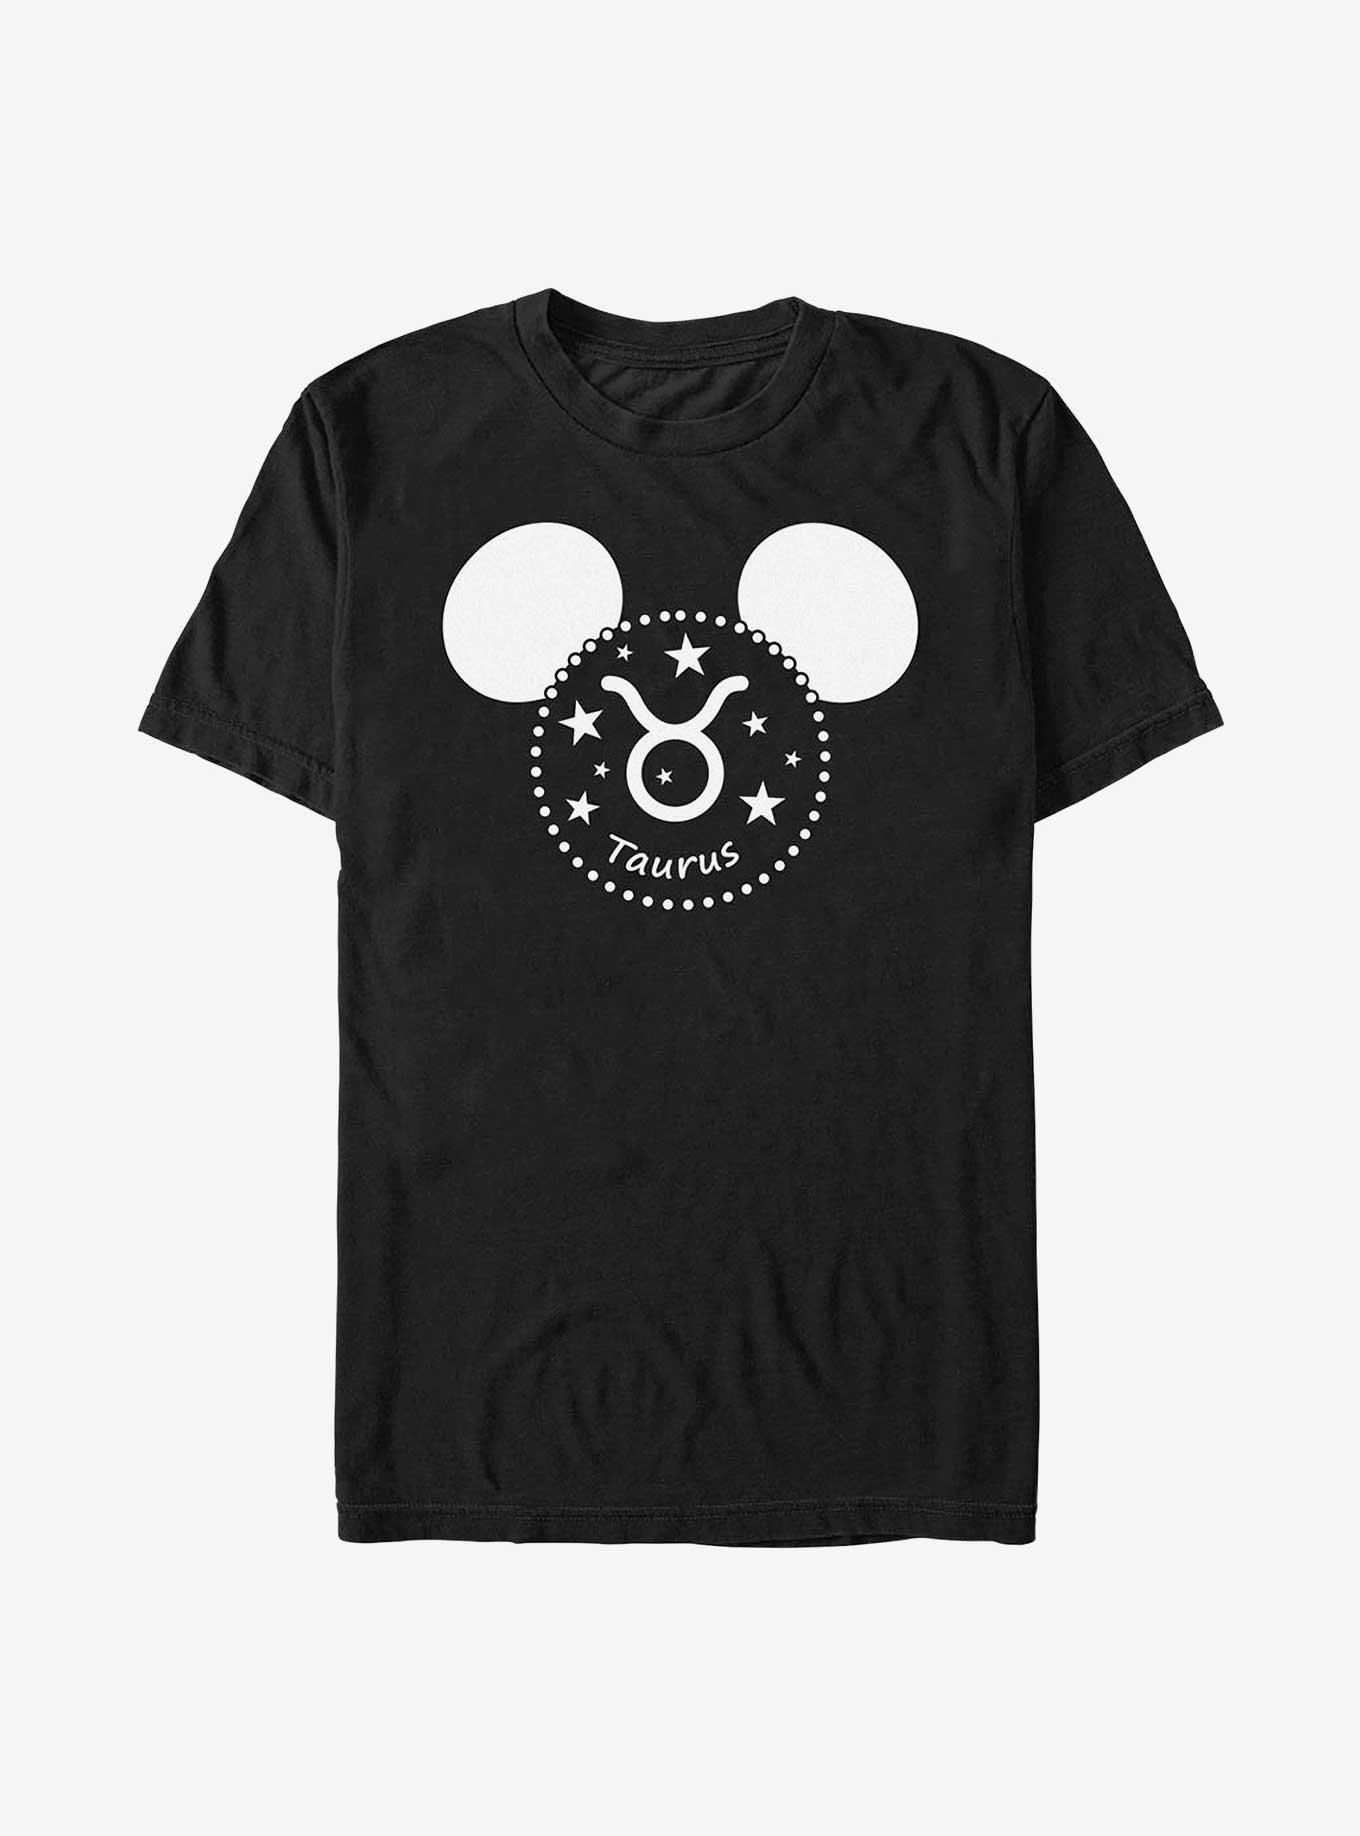 Disney Mickey Mouse Zodiac Taurus T-Shirt